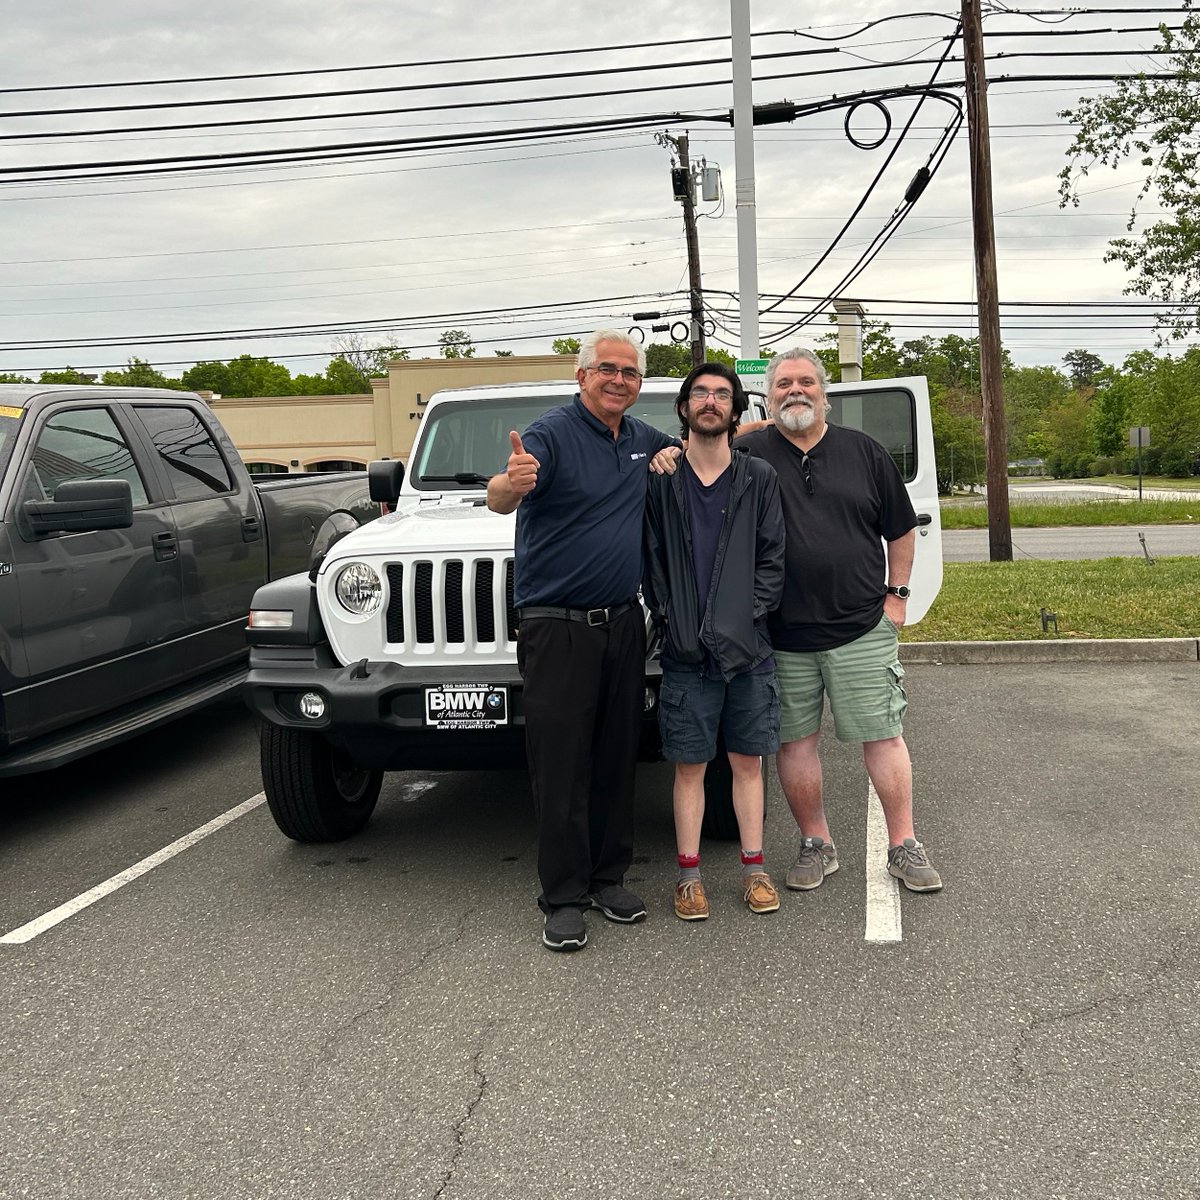 💙 Welcome to the family, Ron! Enjoy your new Jeep sold by Mark! #JeepFam #JeepLove

📲 Mark K: 609-351-8422
MKaminski@BMWAtlanticCity.com